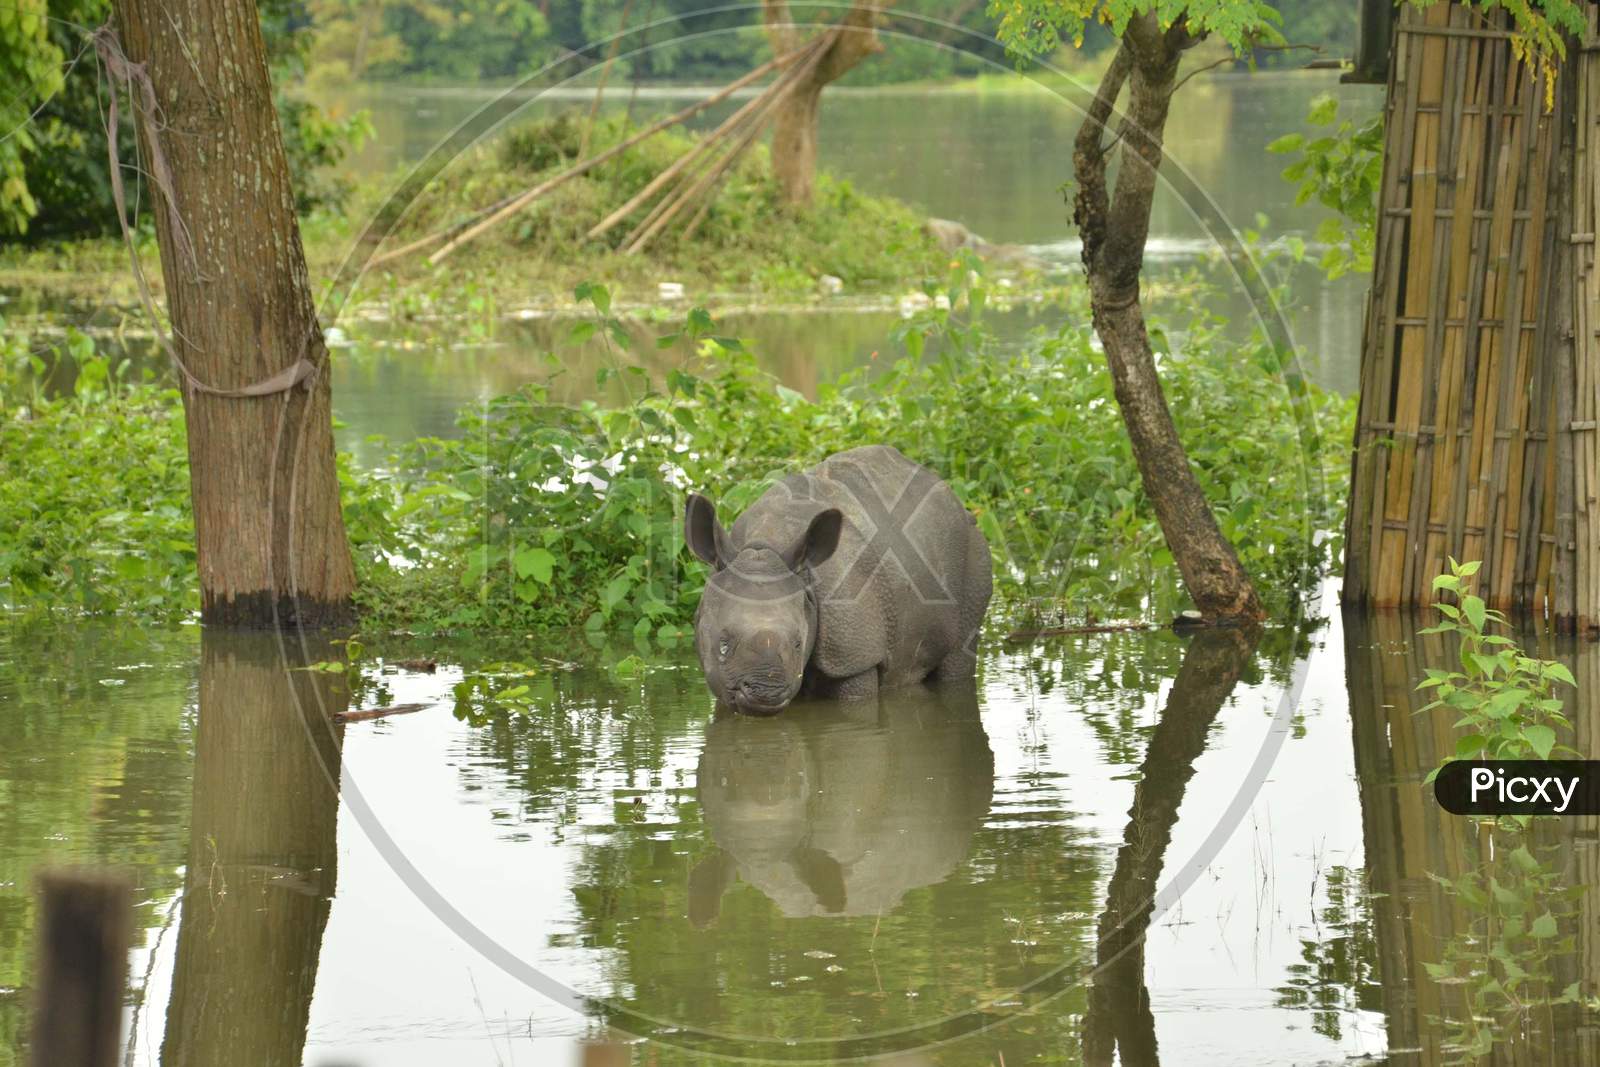 A Baby Rhino  Seen, Stand Near A Human Settlement Following Floods At The Kaziranga National Park, East Of Gauhati, Northeastern Assam State, India, July 27, 2016